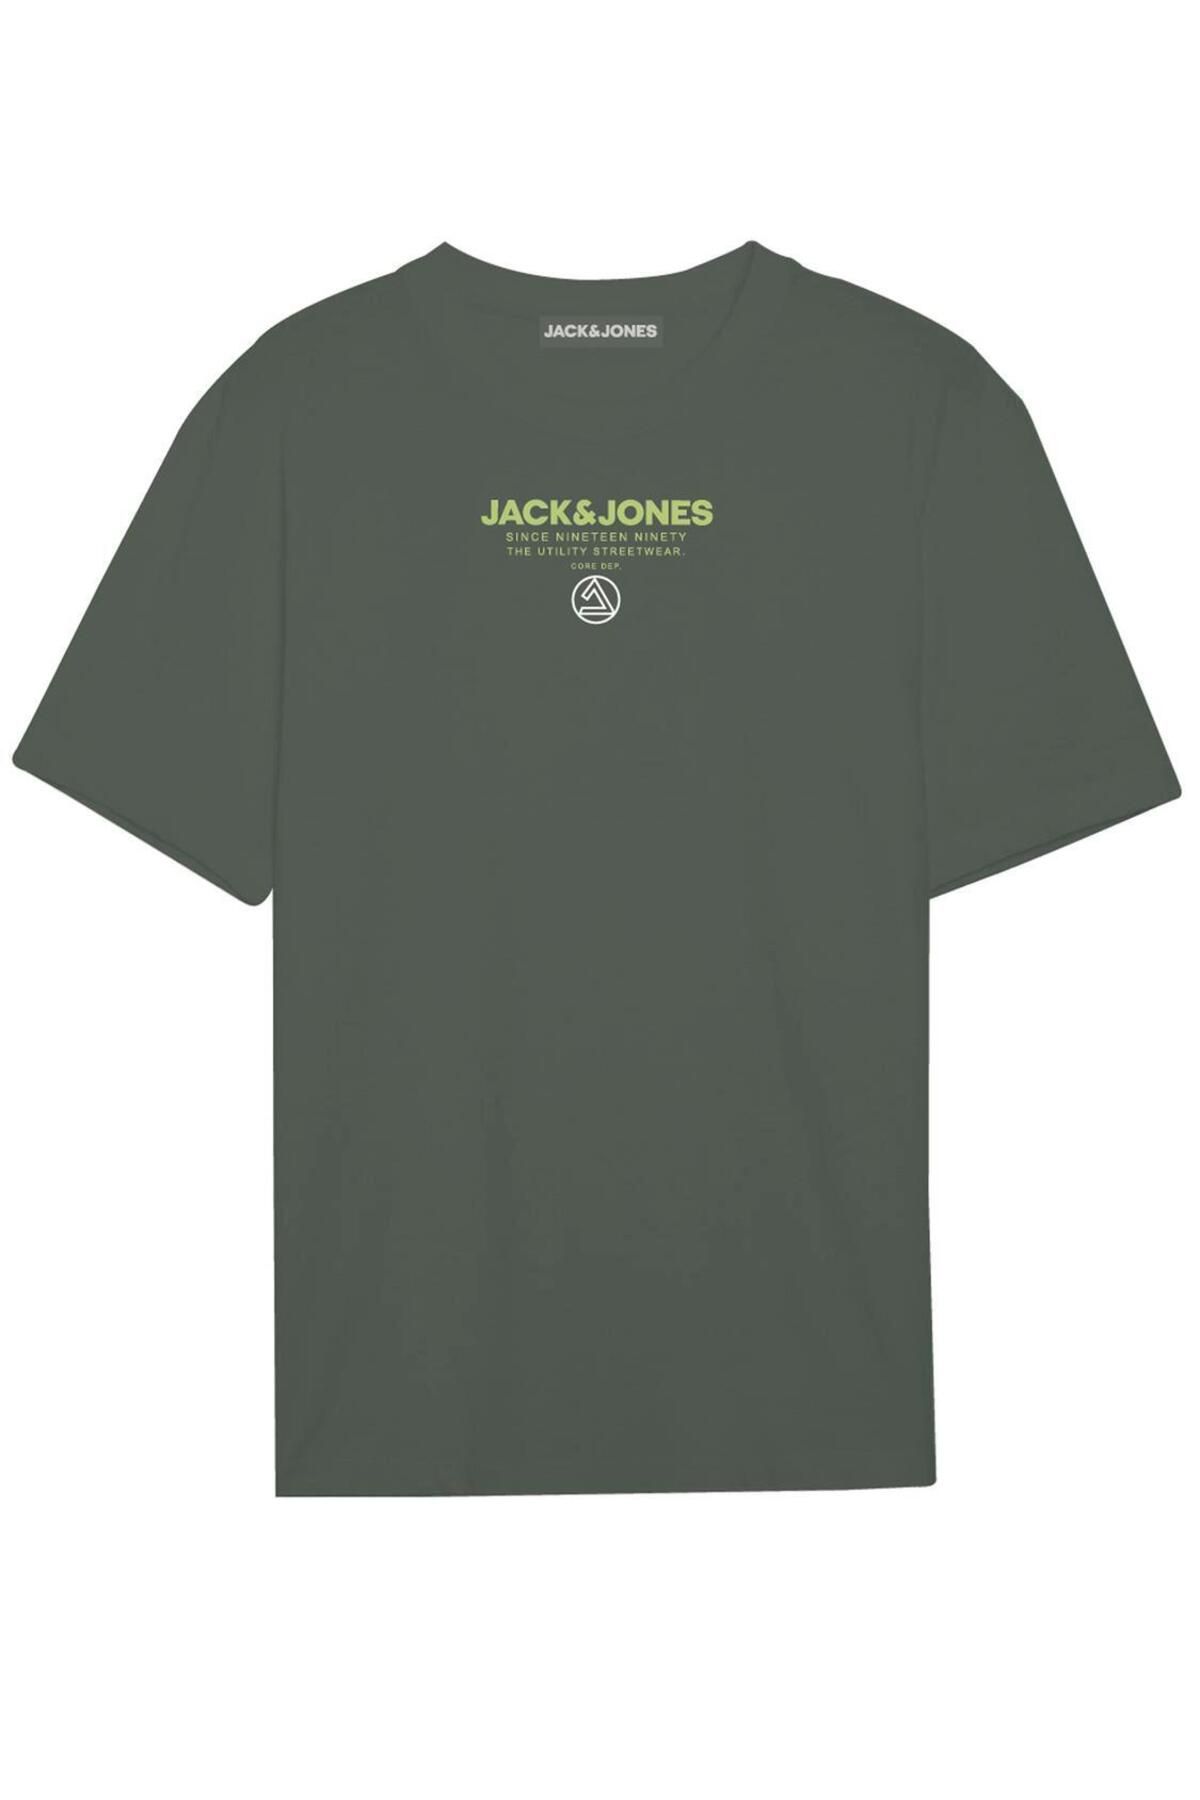 Jack & Jones Jcotypo Tee Ss Crew Neck Fst Erkek T-shirt 12256163 Forest Night